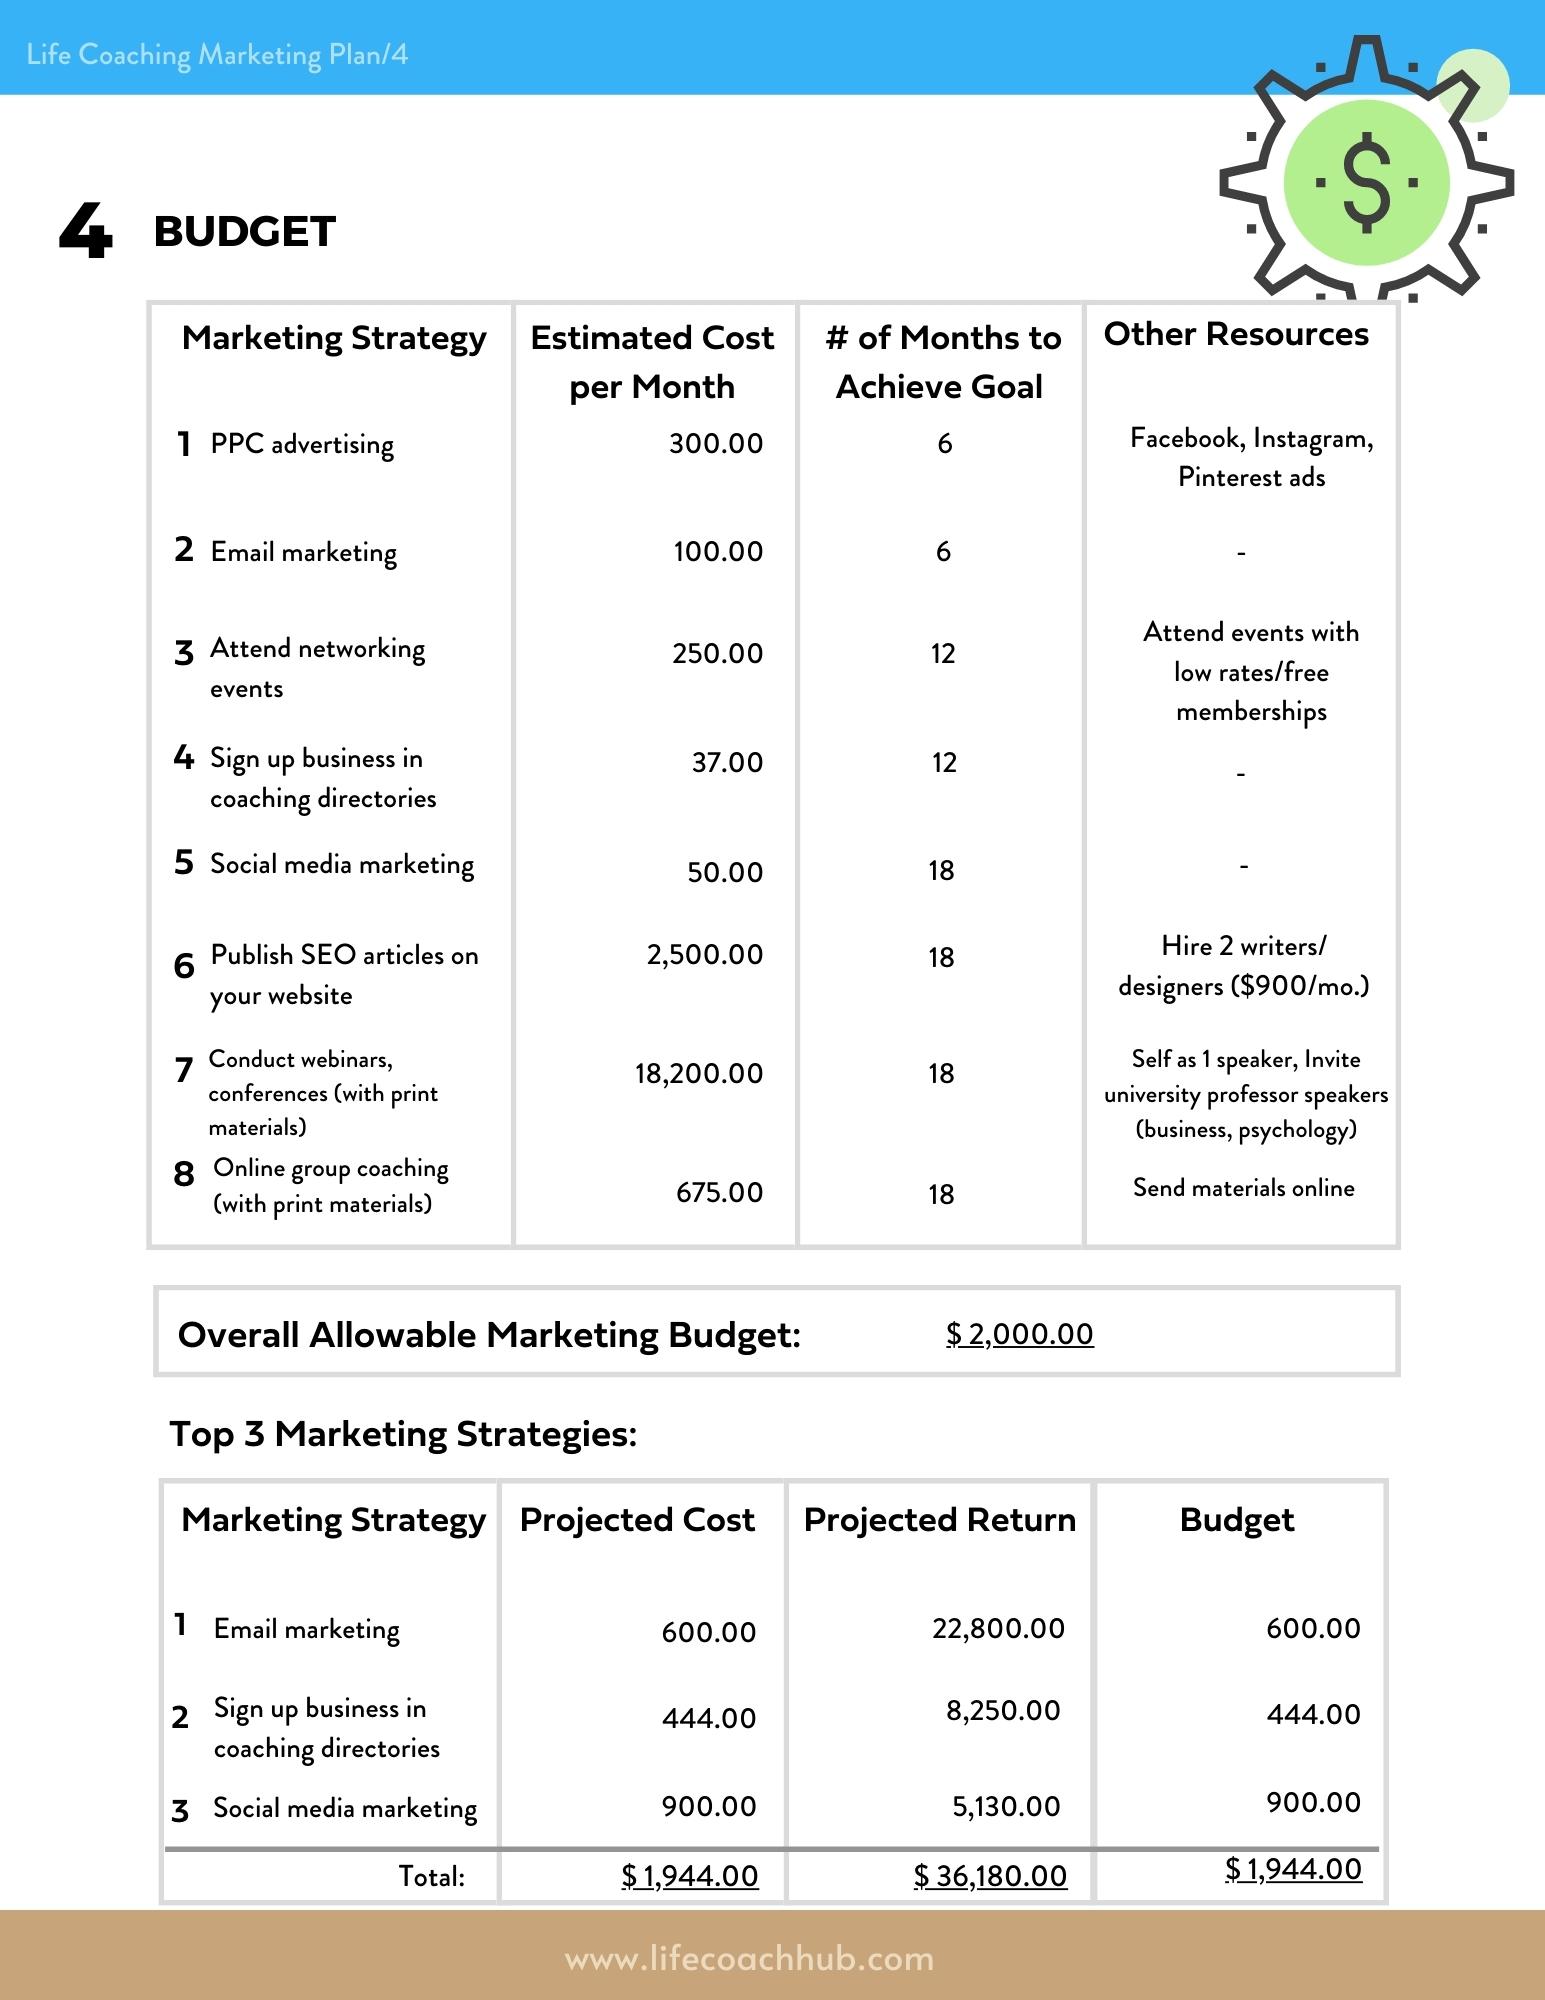 Life coaching marketing plan budget